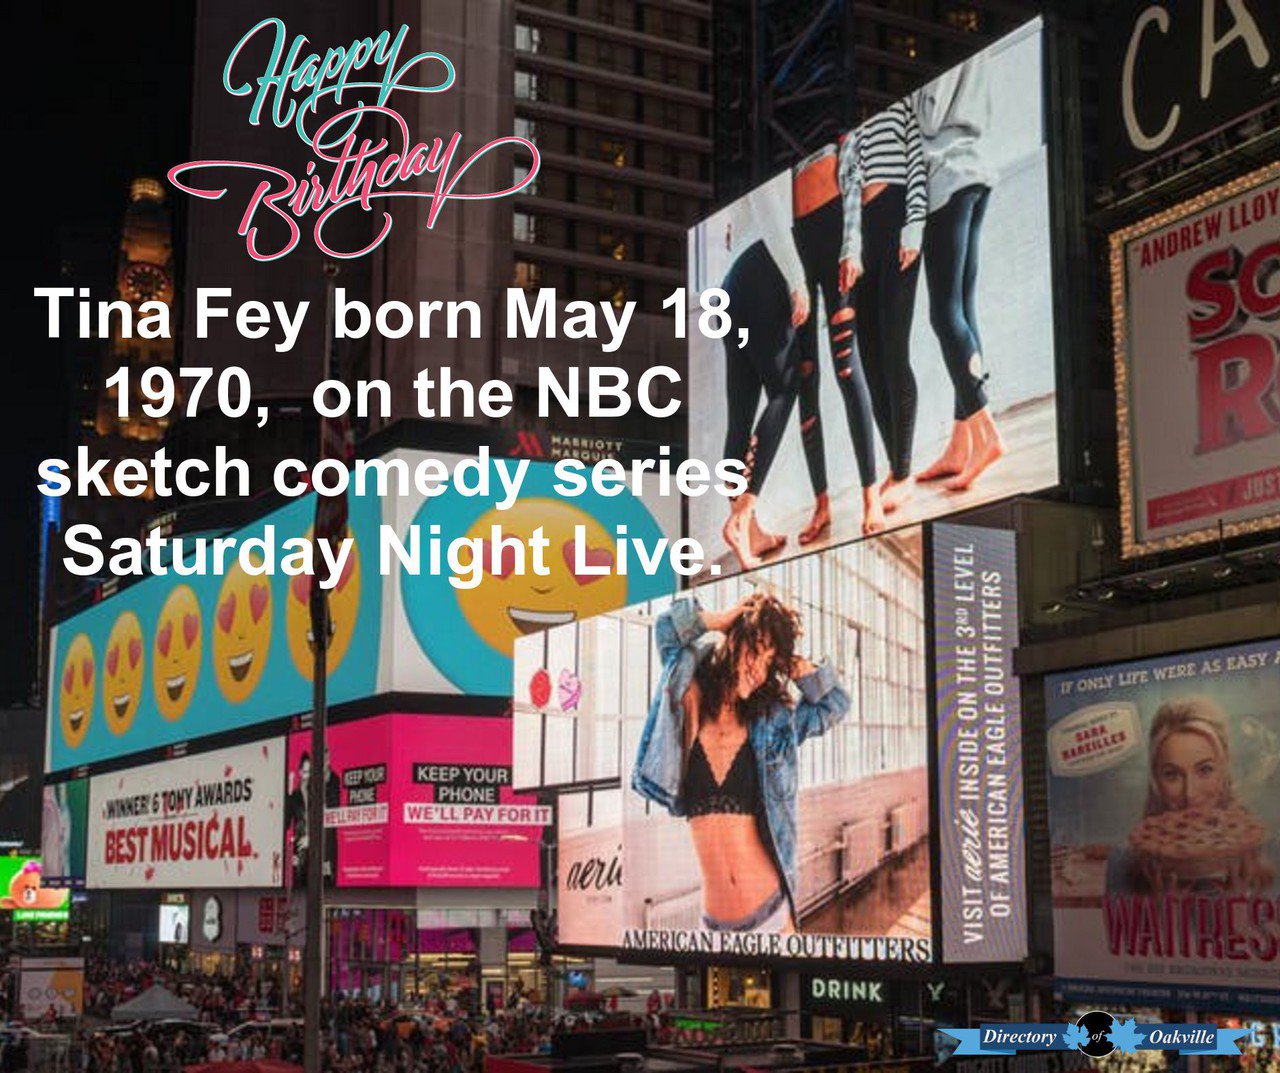 HAPPY BIRTHDAY!
Tina Fey born May 18, 1970,  on the NBC sketch comedy series Saturday Night Live. 